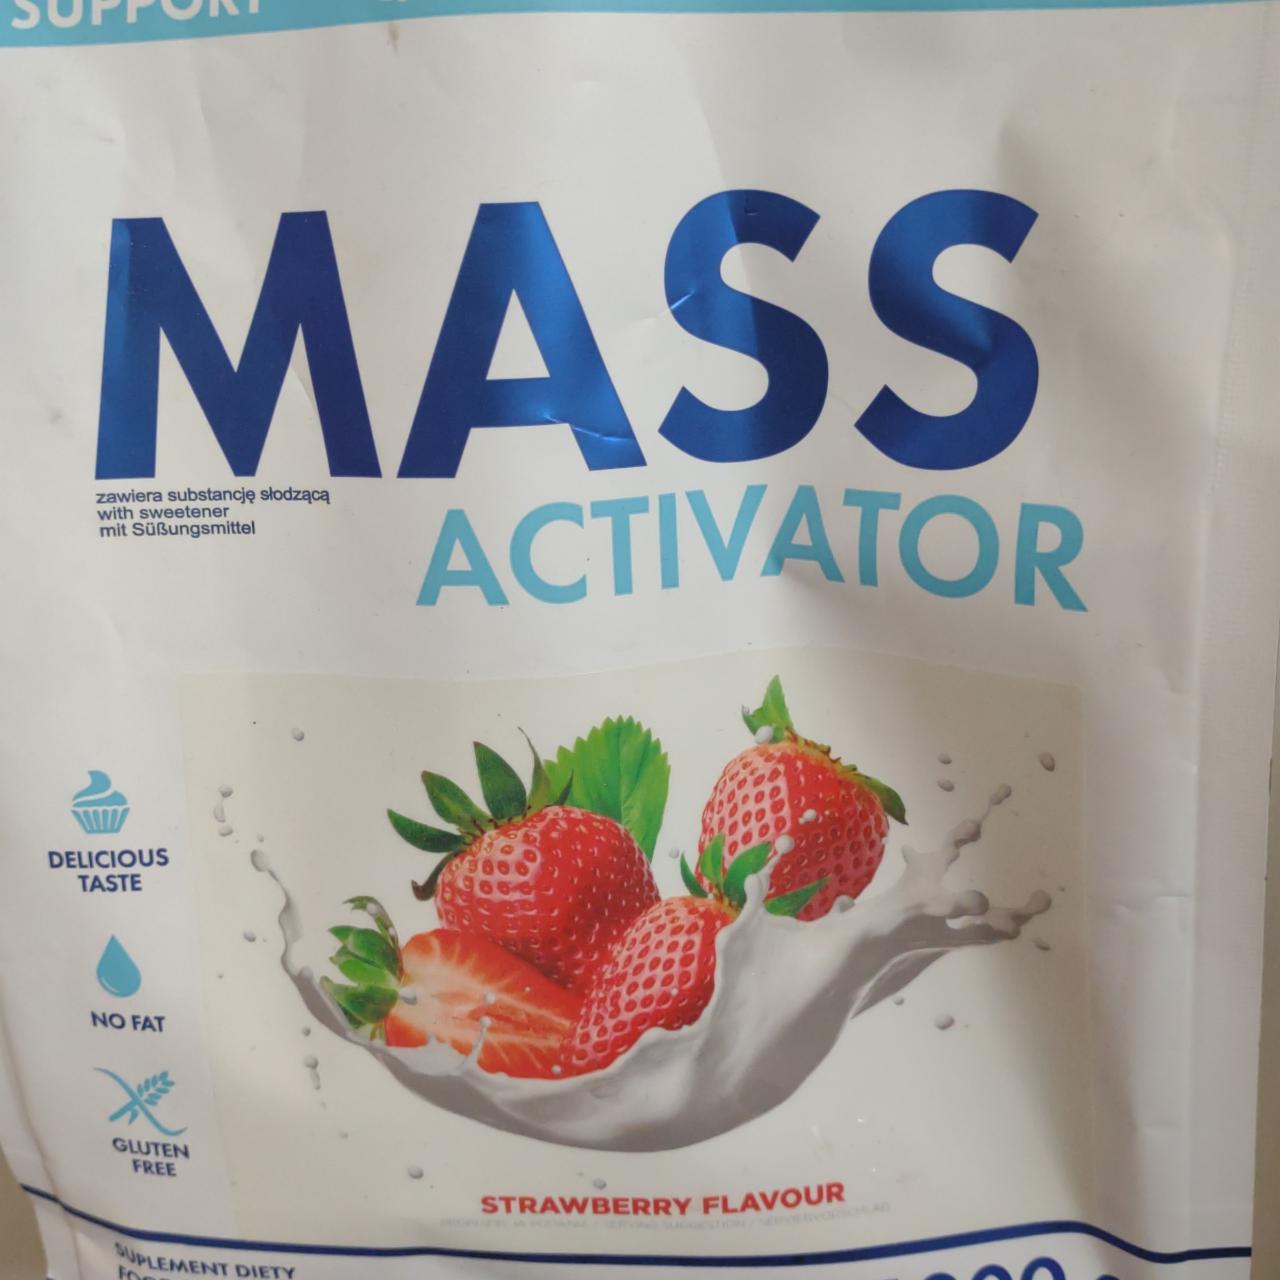 Zdjęcia - Mass Activator Strawberry SFD Nutrition